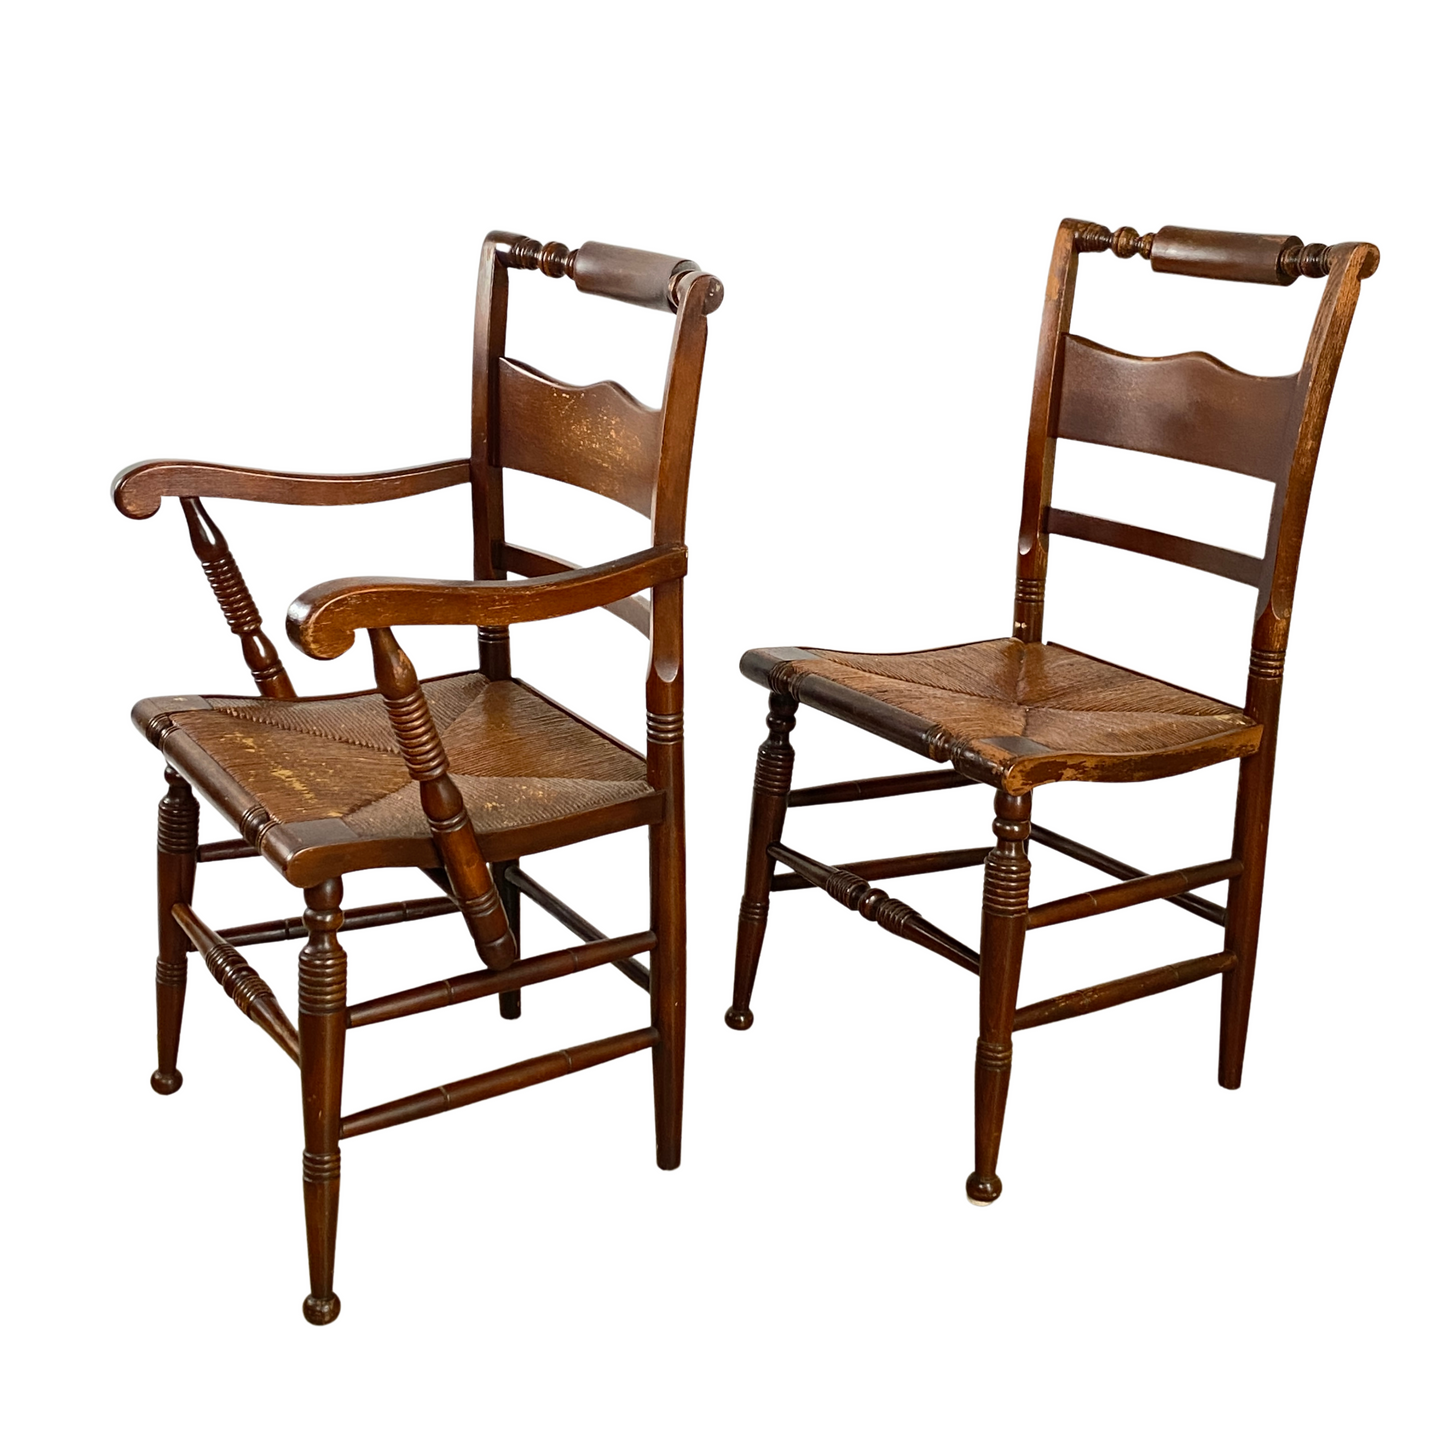 Antique Slat Back Rush Bottom Chairs (4)